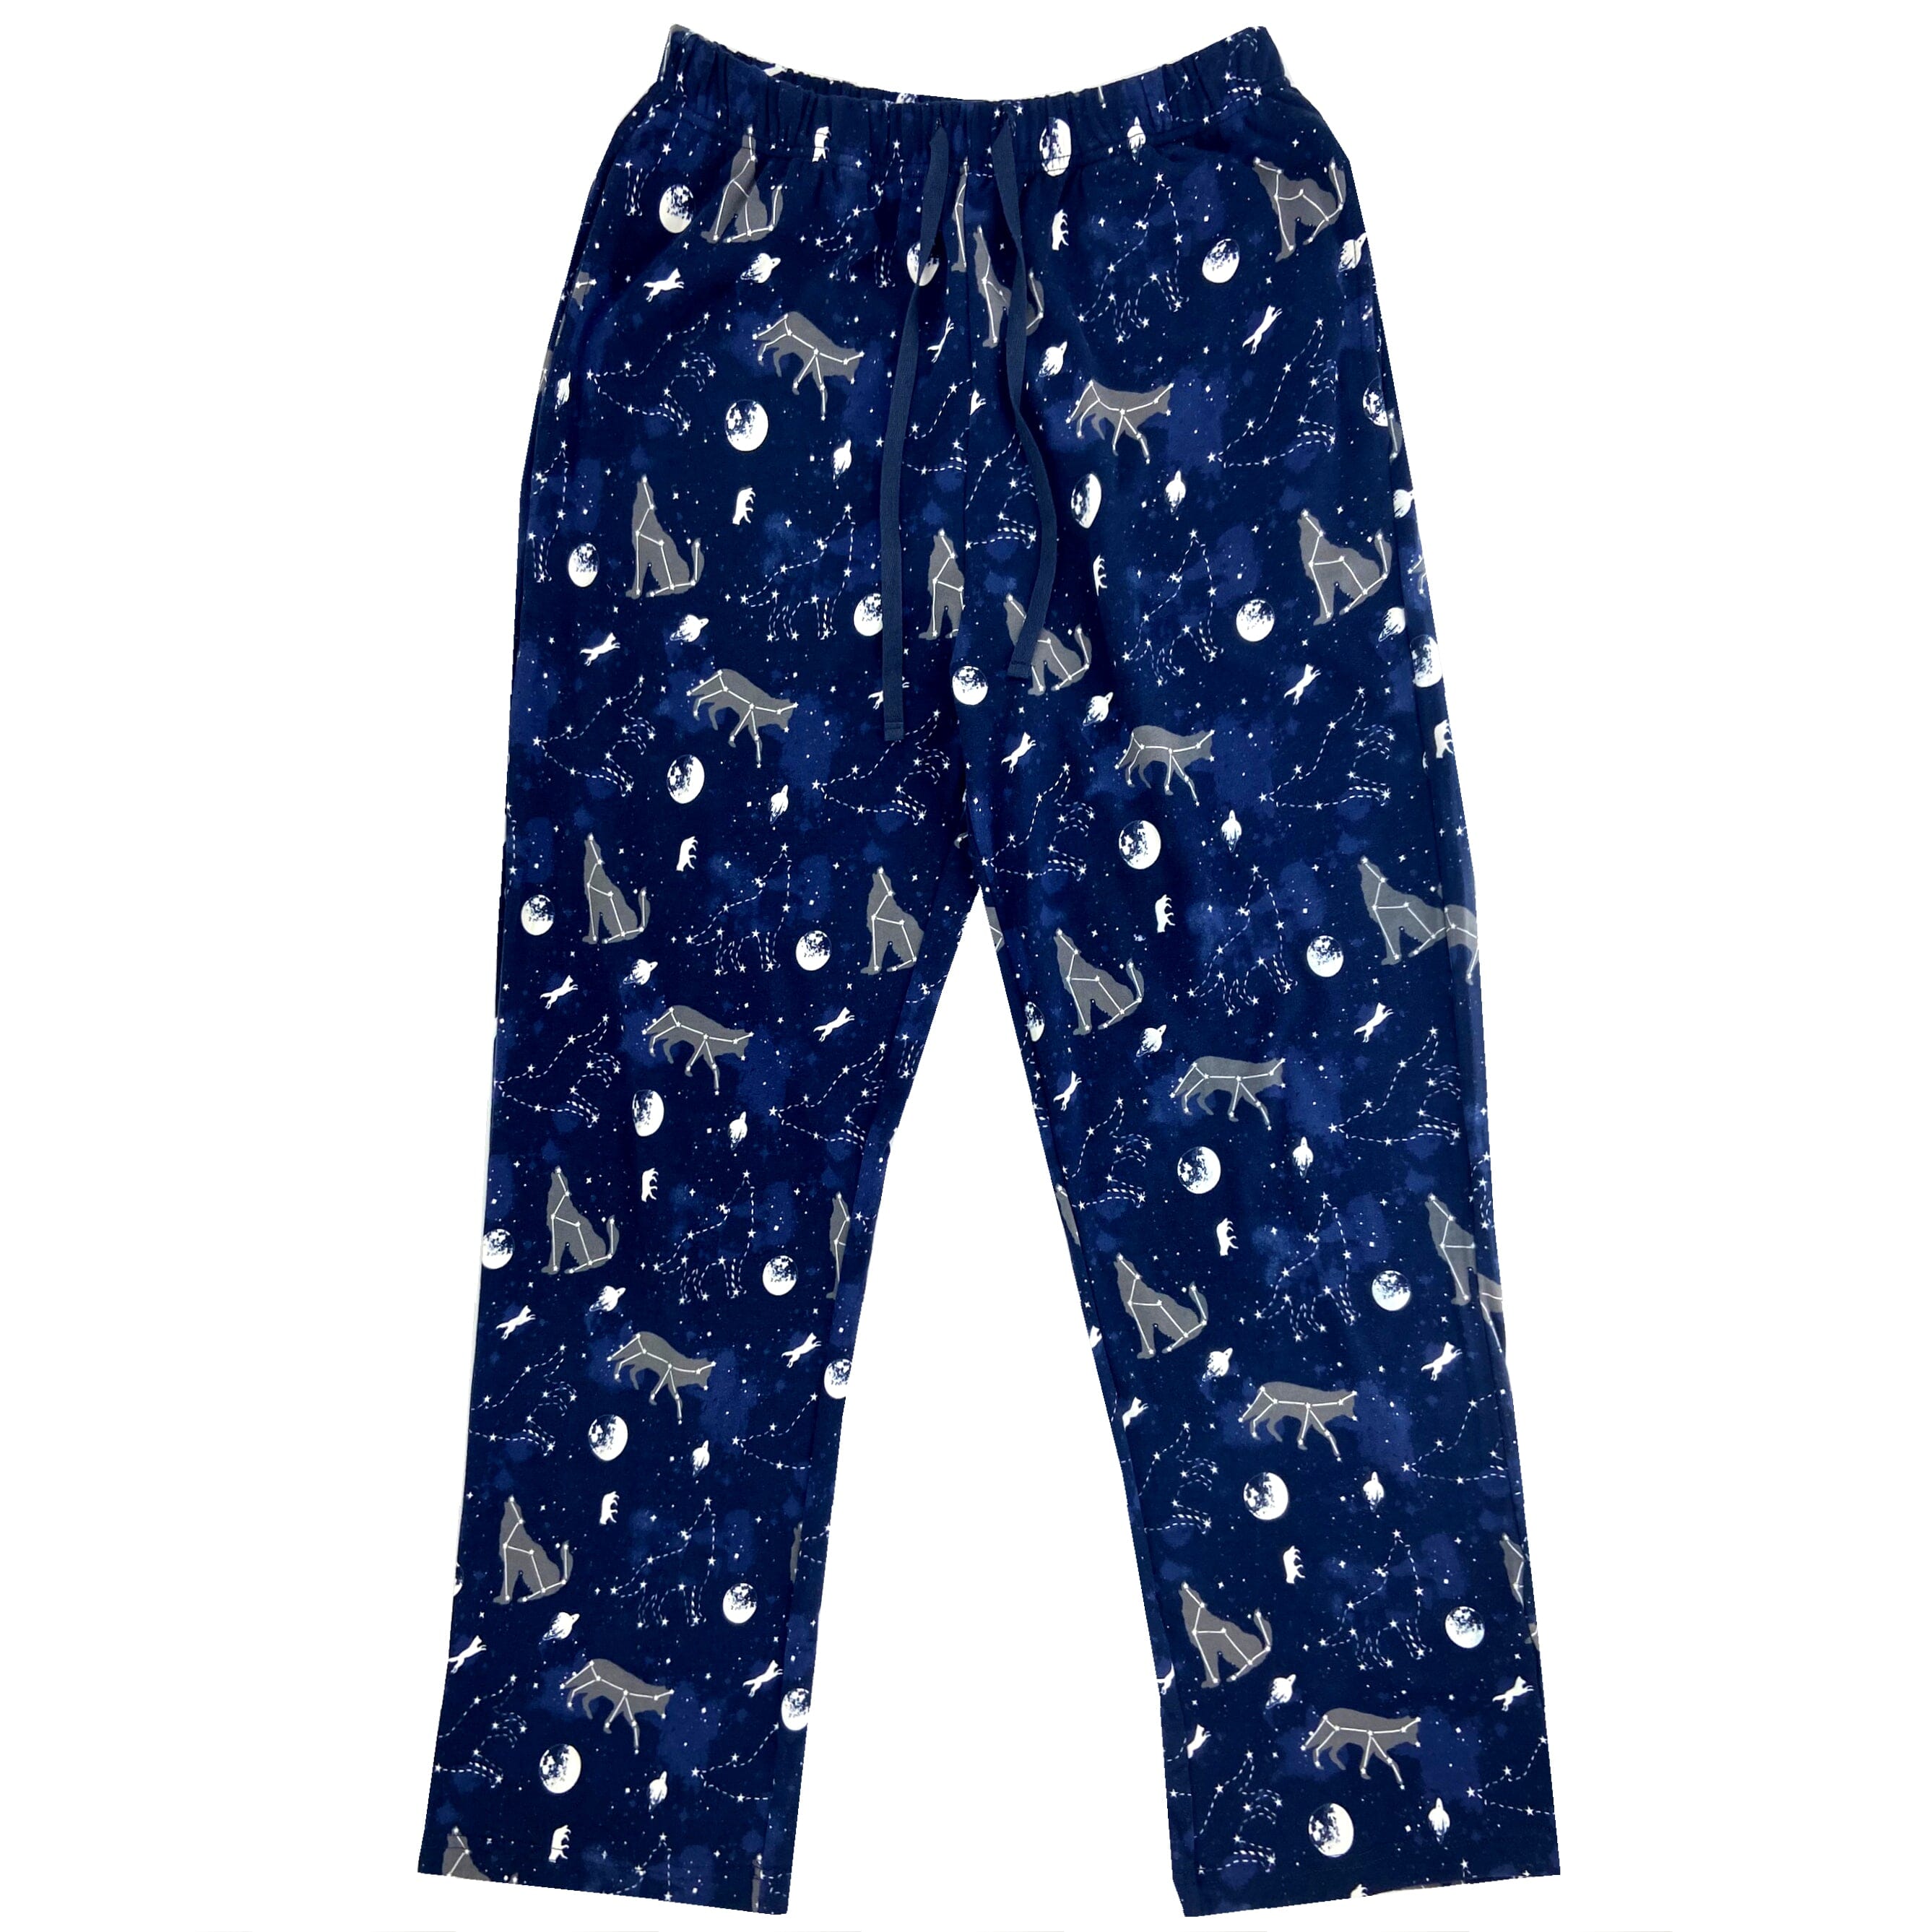 Men's Howling Wolf Star Night Sky Print Cotton Knit Long Pajama Pants